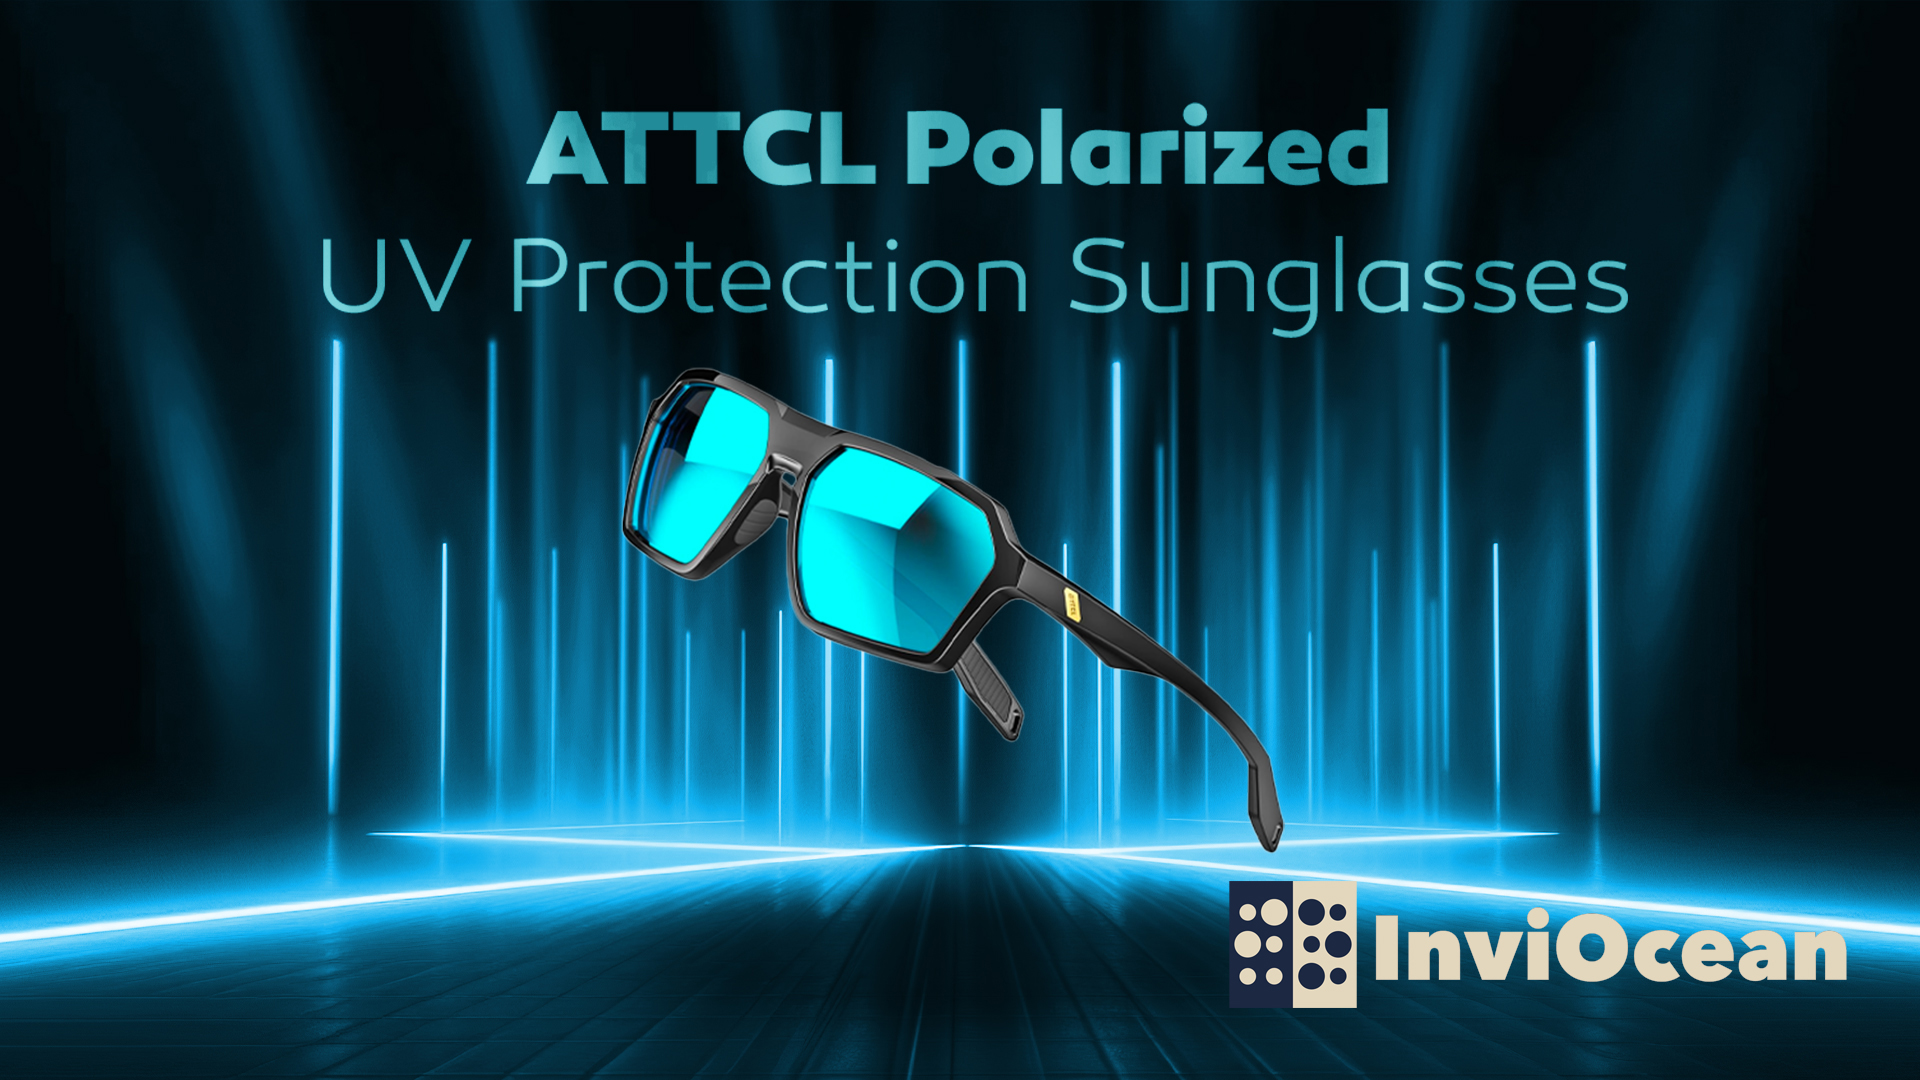 ATTCL Polarized UV Protection Sunglasses